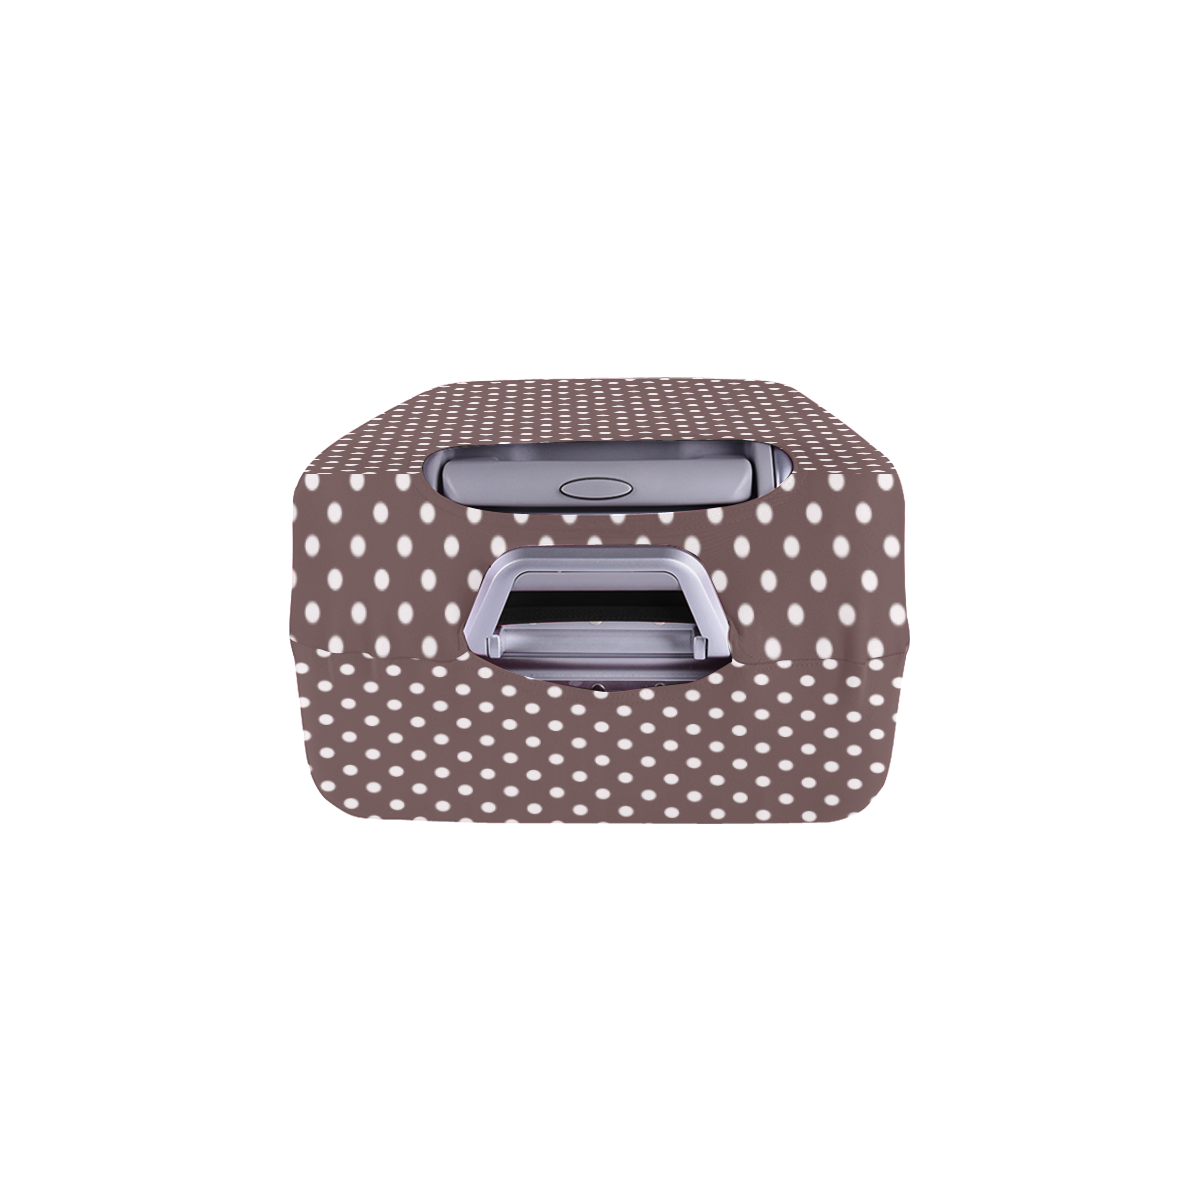 Chocolate brown polka dots Luggage Cover/Medium 22"-25"